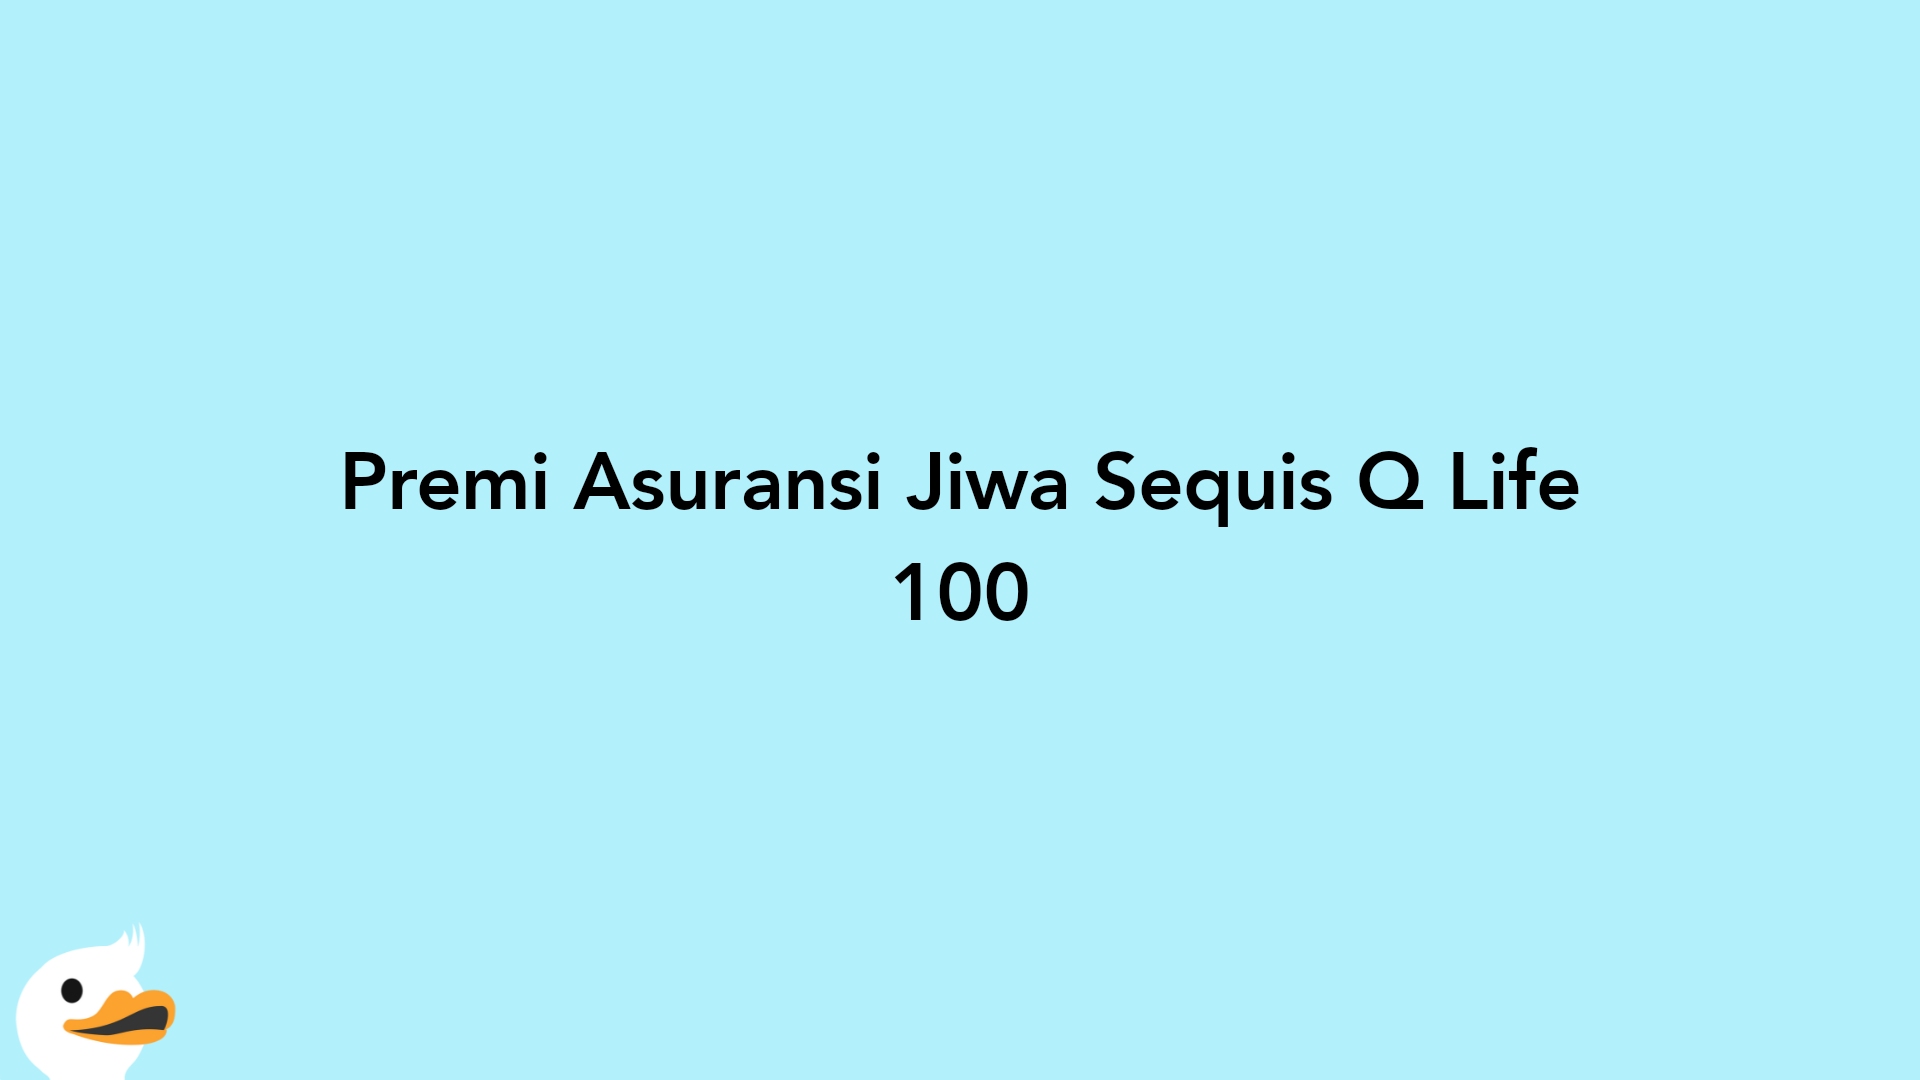 Premi Asuransi Jiwa Sequis Q Life 100